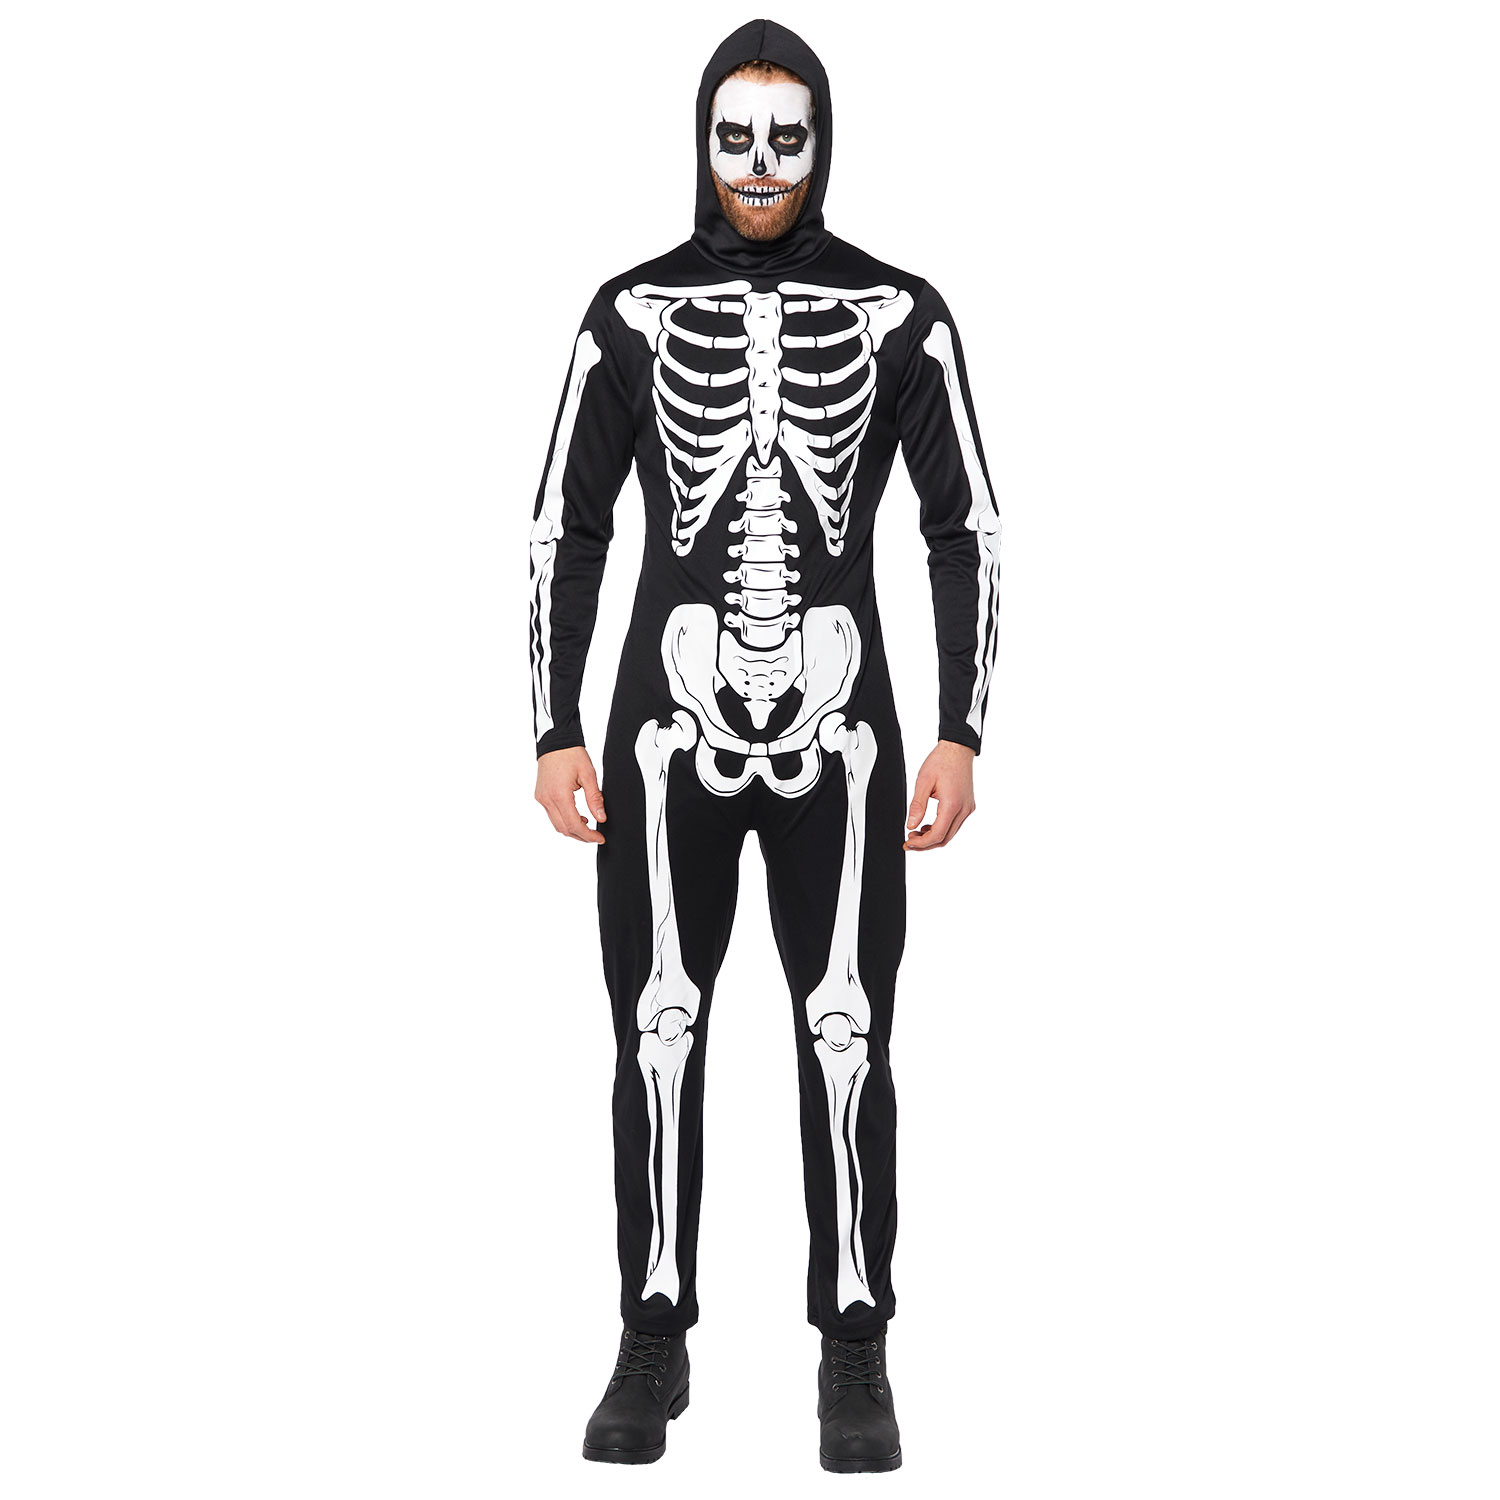 Skeleton Costume - Size Medium - 1 PC : Amscan International